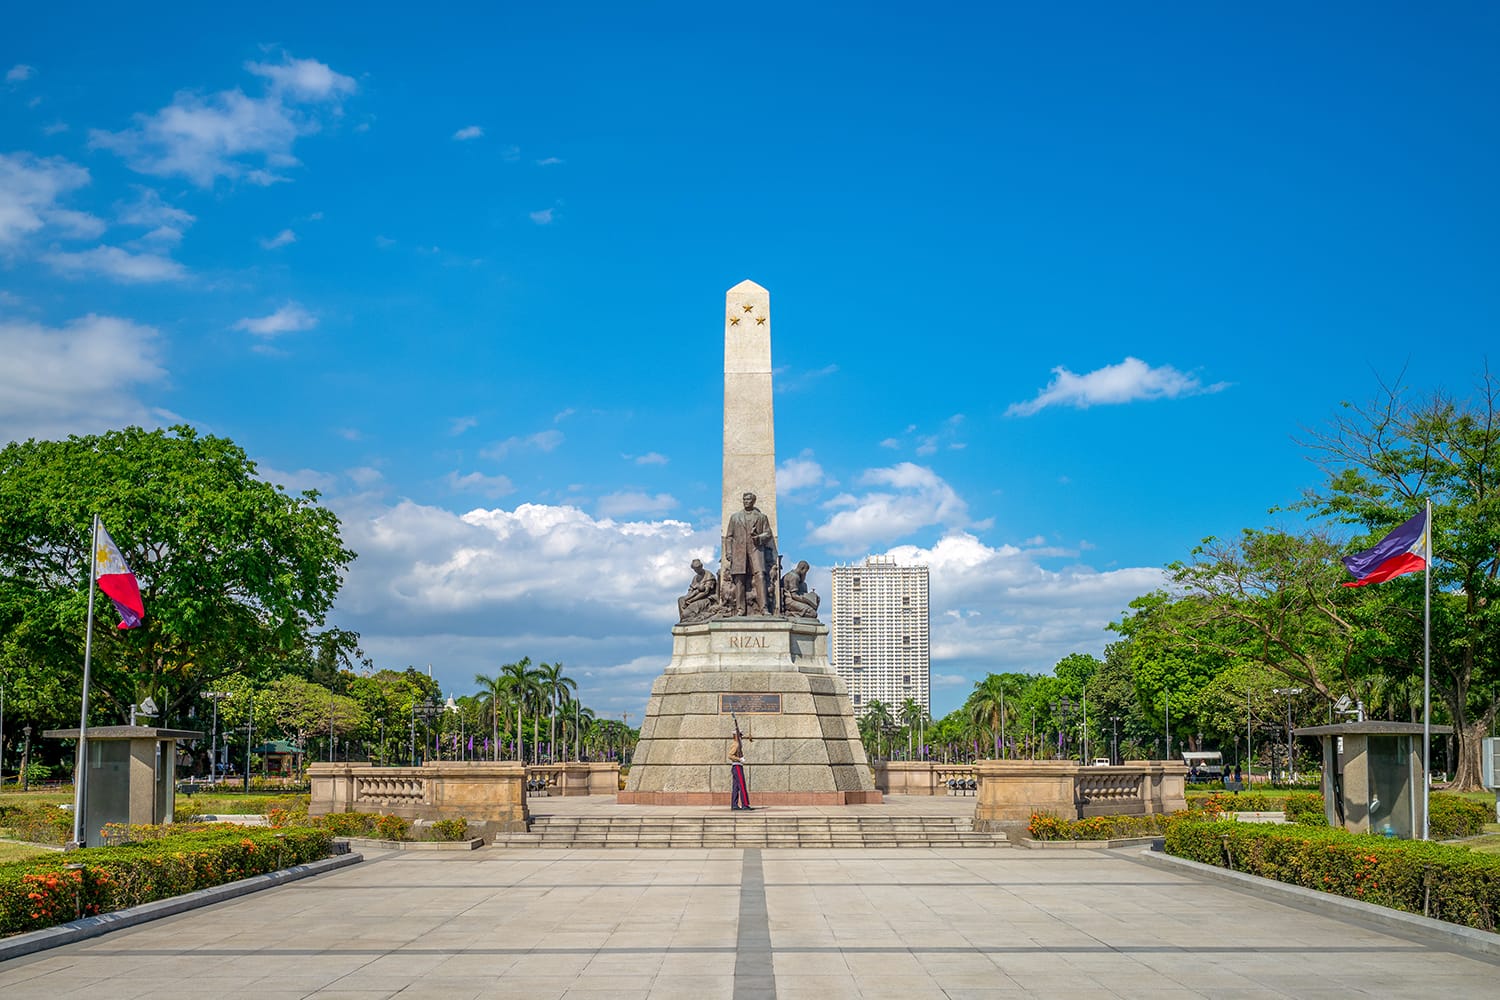 Rizal park (Luneta) and Rizal Monument in Manila, Philippines